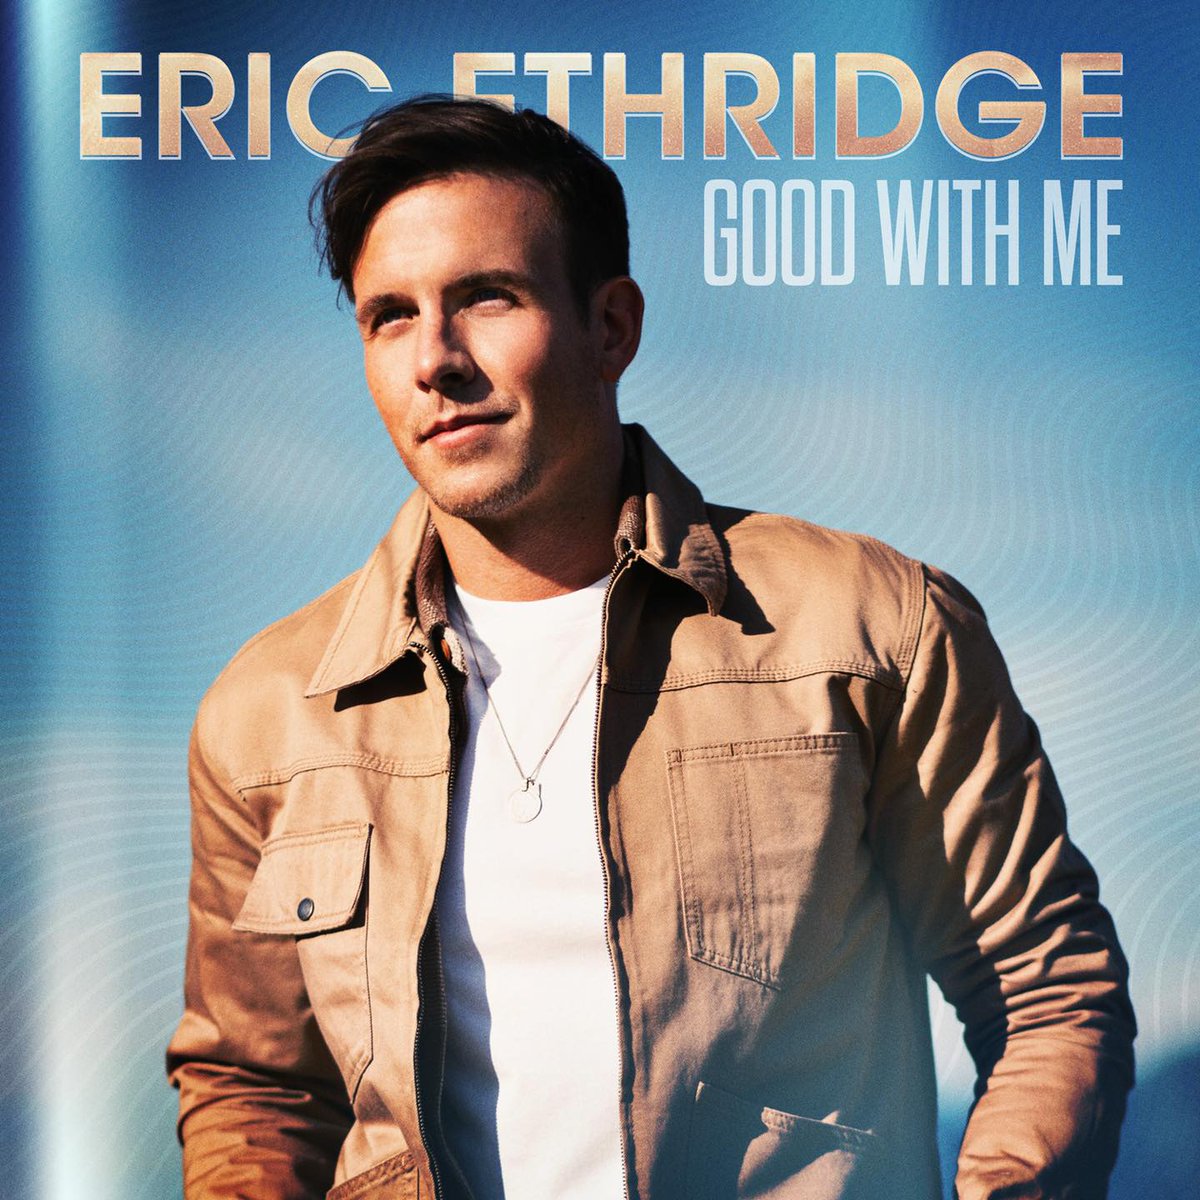 Listen to the new album from @EricEthridge #GoodWithMe here: yaletownfm.com/eric-ethridge-…